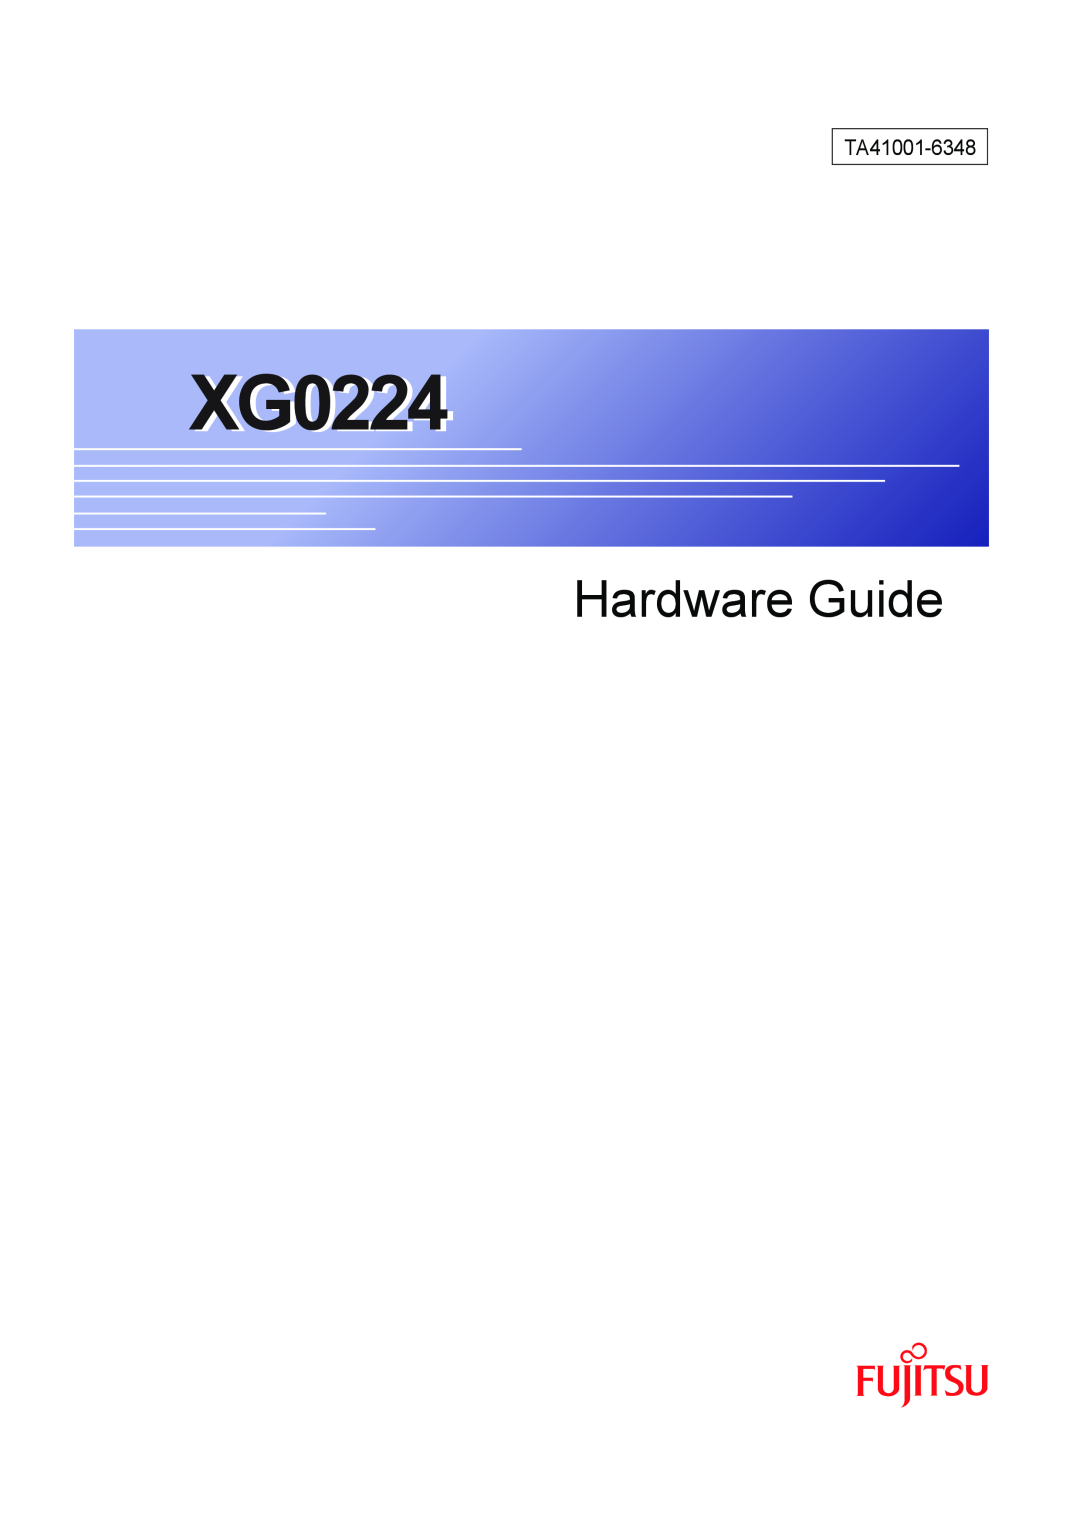 Fujitsu XG0224 manual TA41001-6348, Hardware Guide 